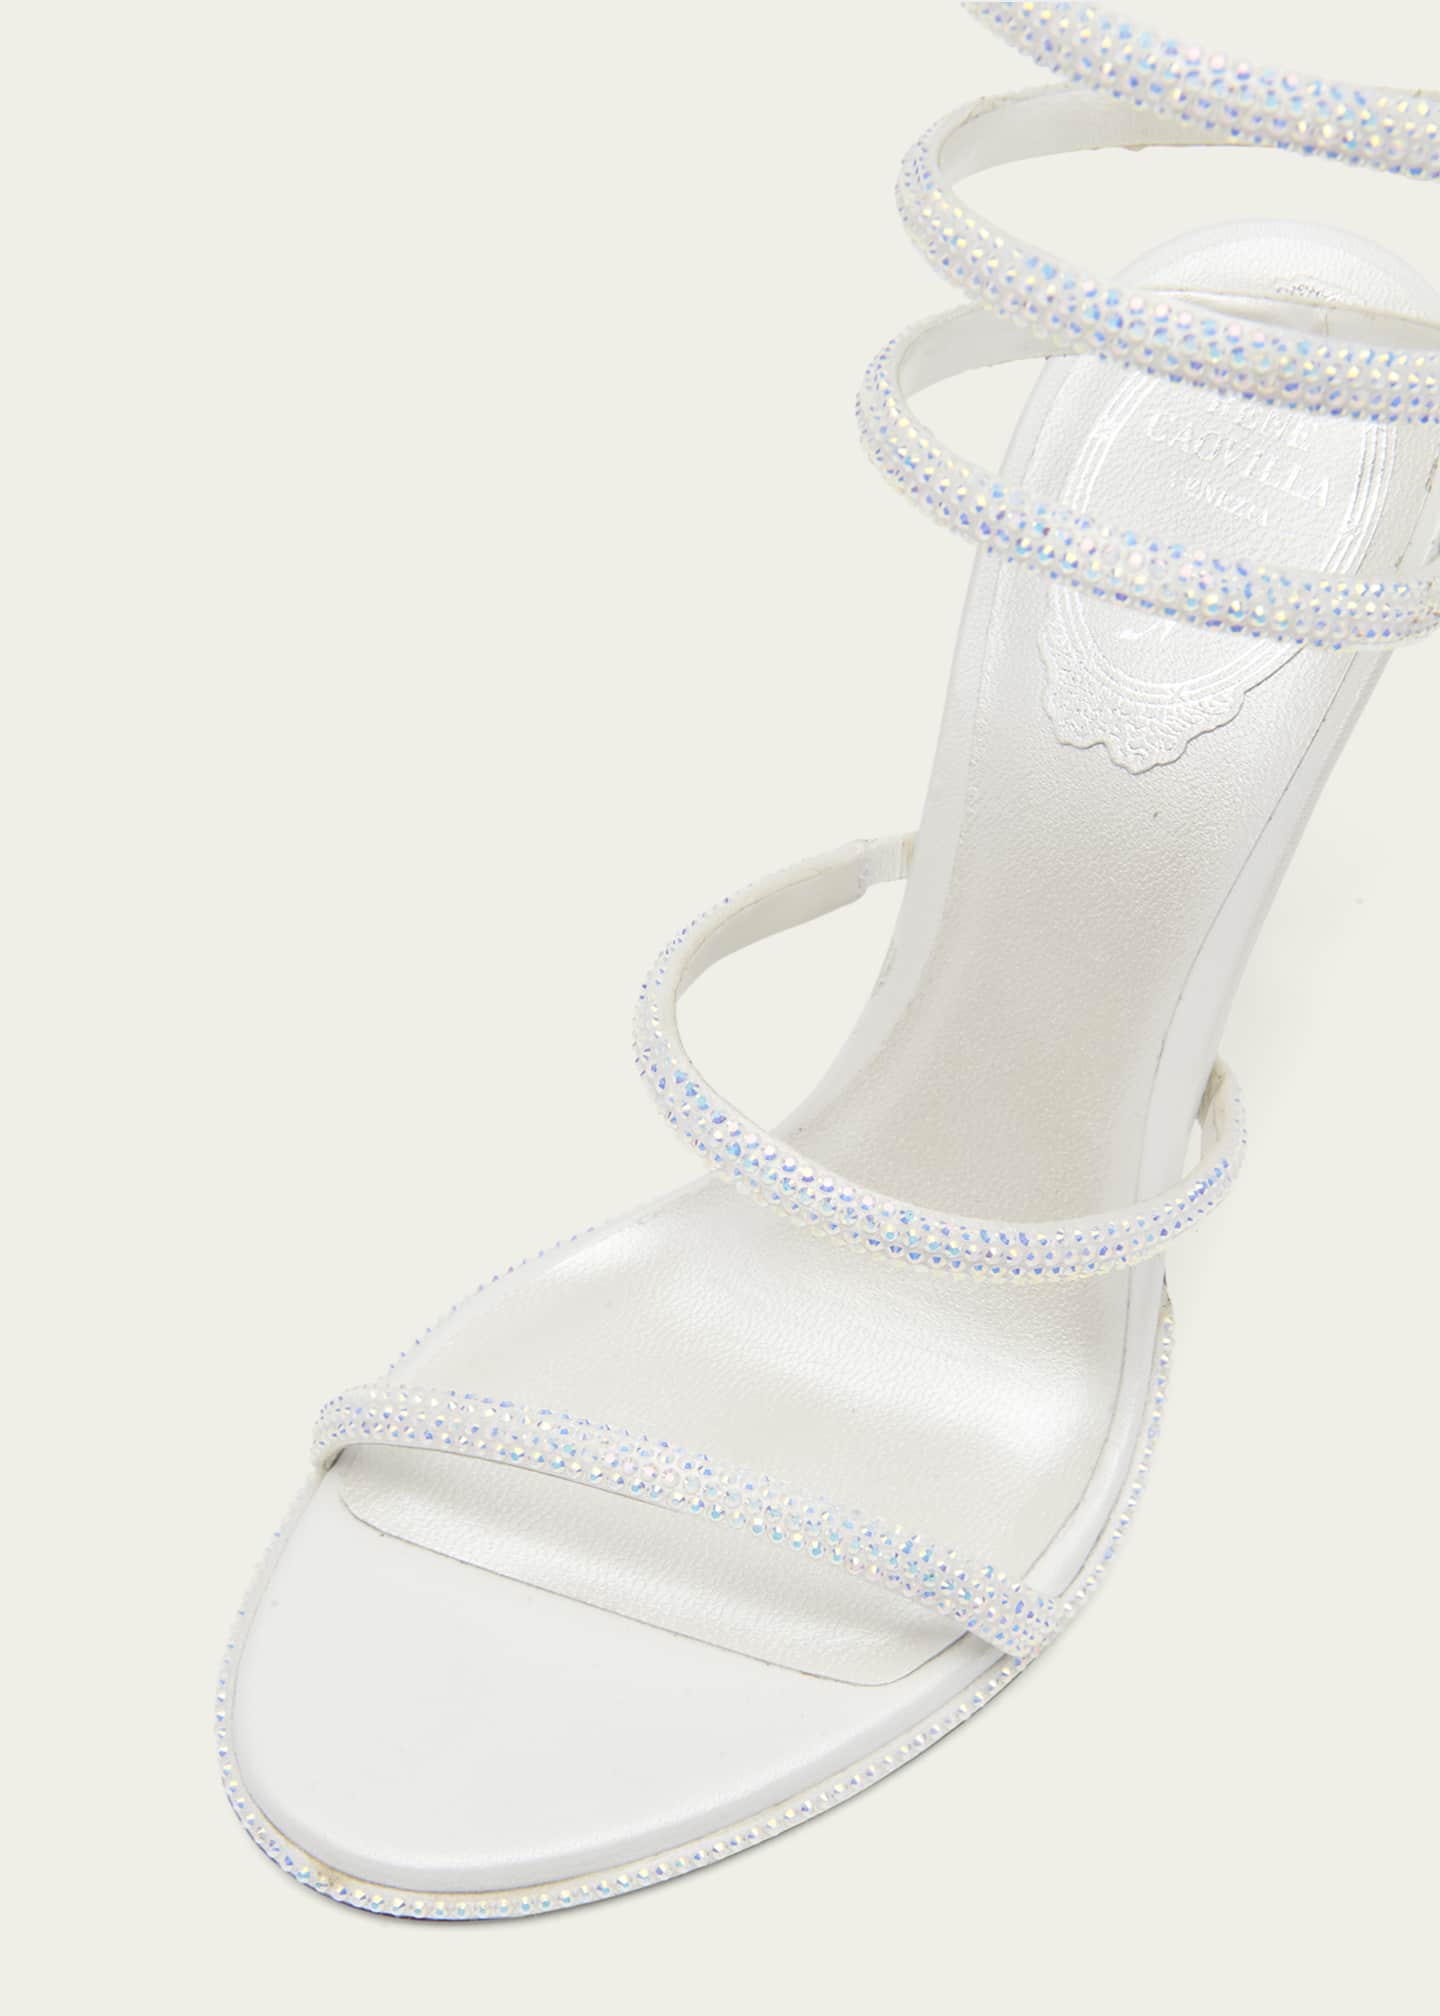 Rene Caovilla Shimmery Crystal Satin Snake Sandals - Bergdorf Goodman